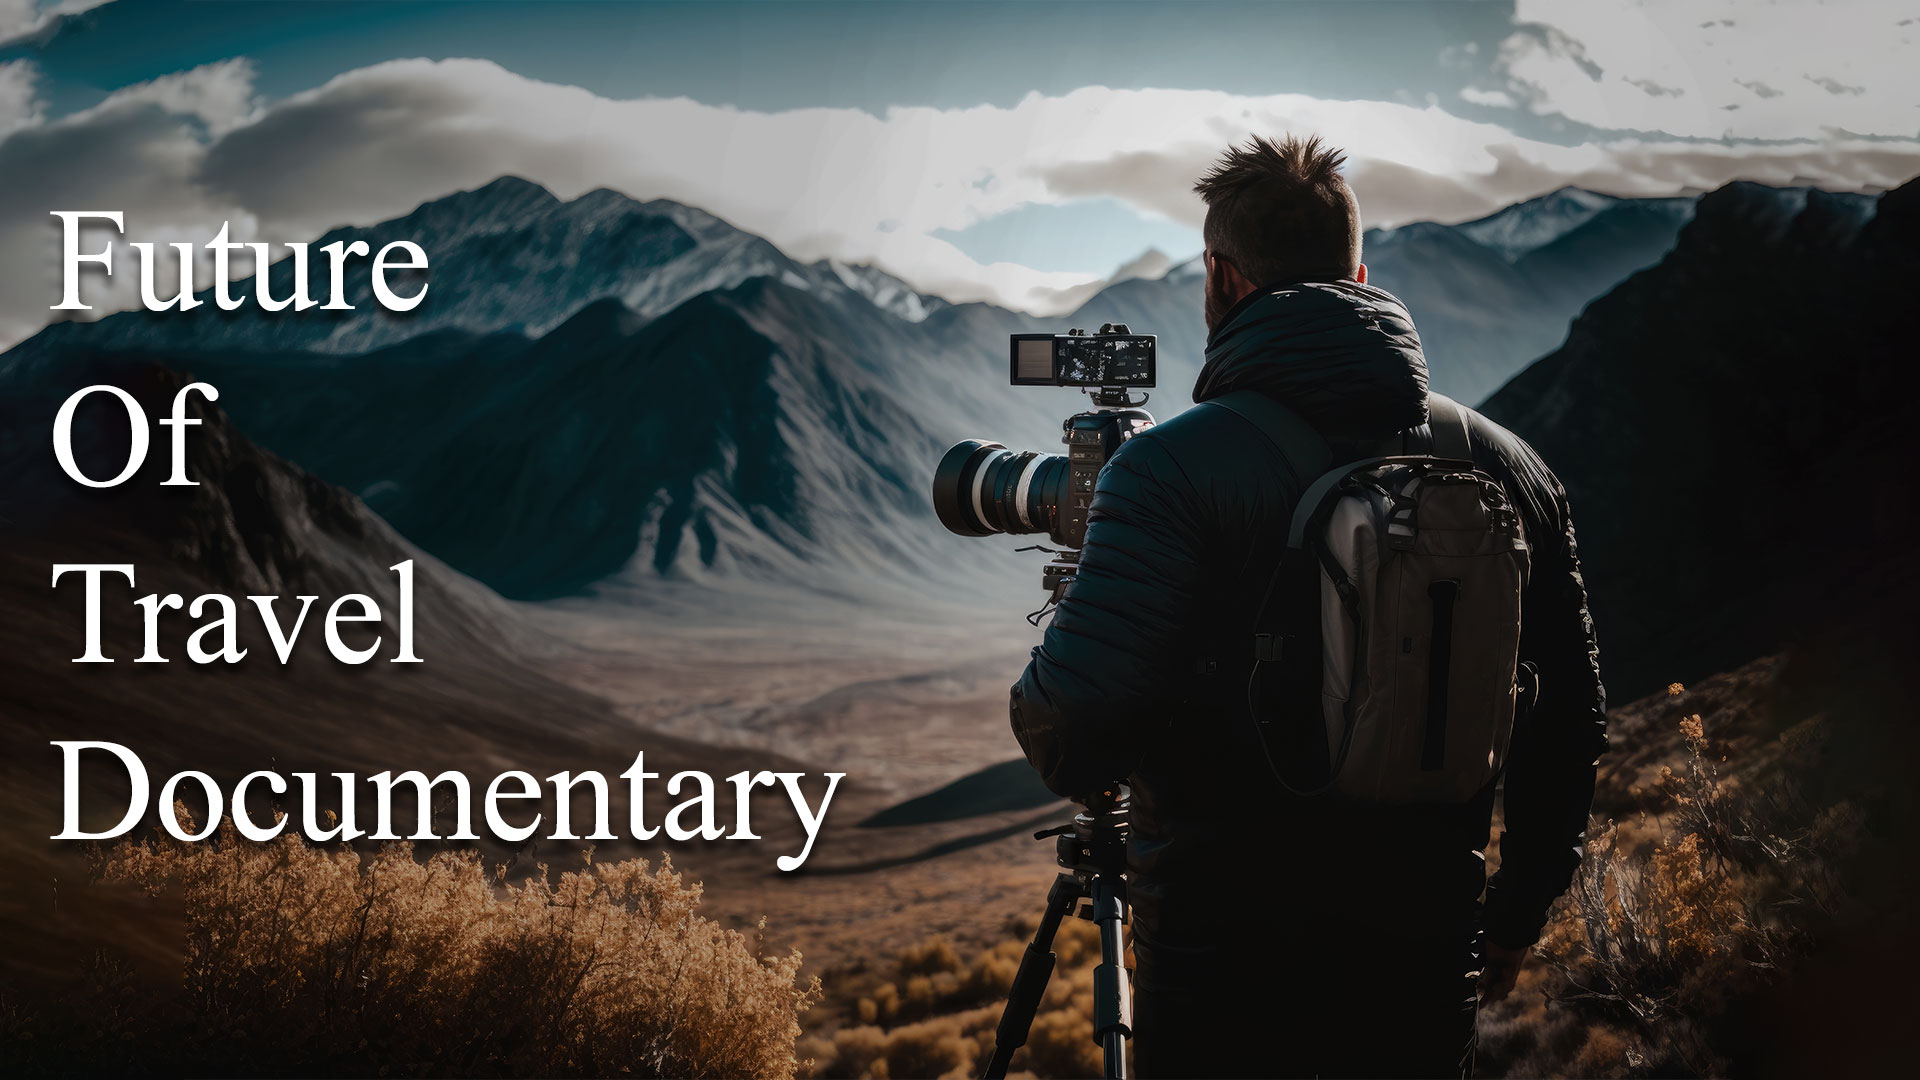 Opportunities for Travel Documentary Film Makers